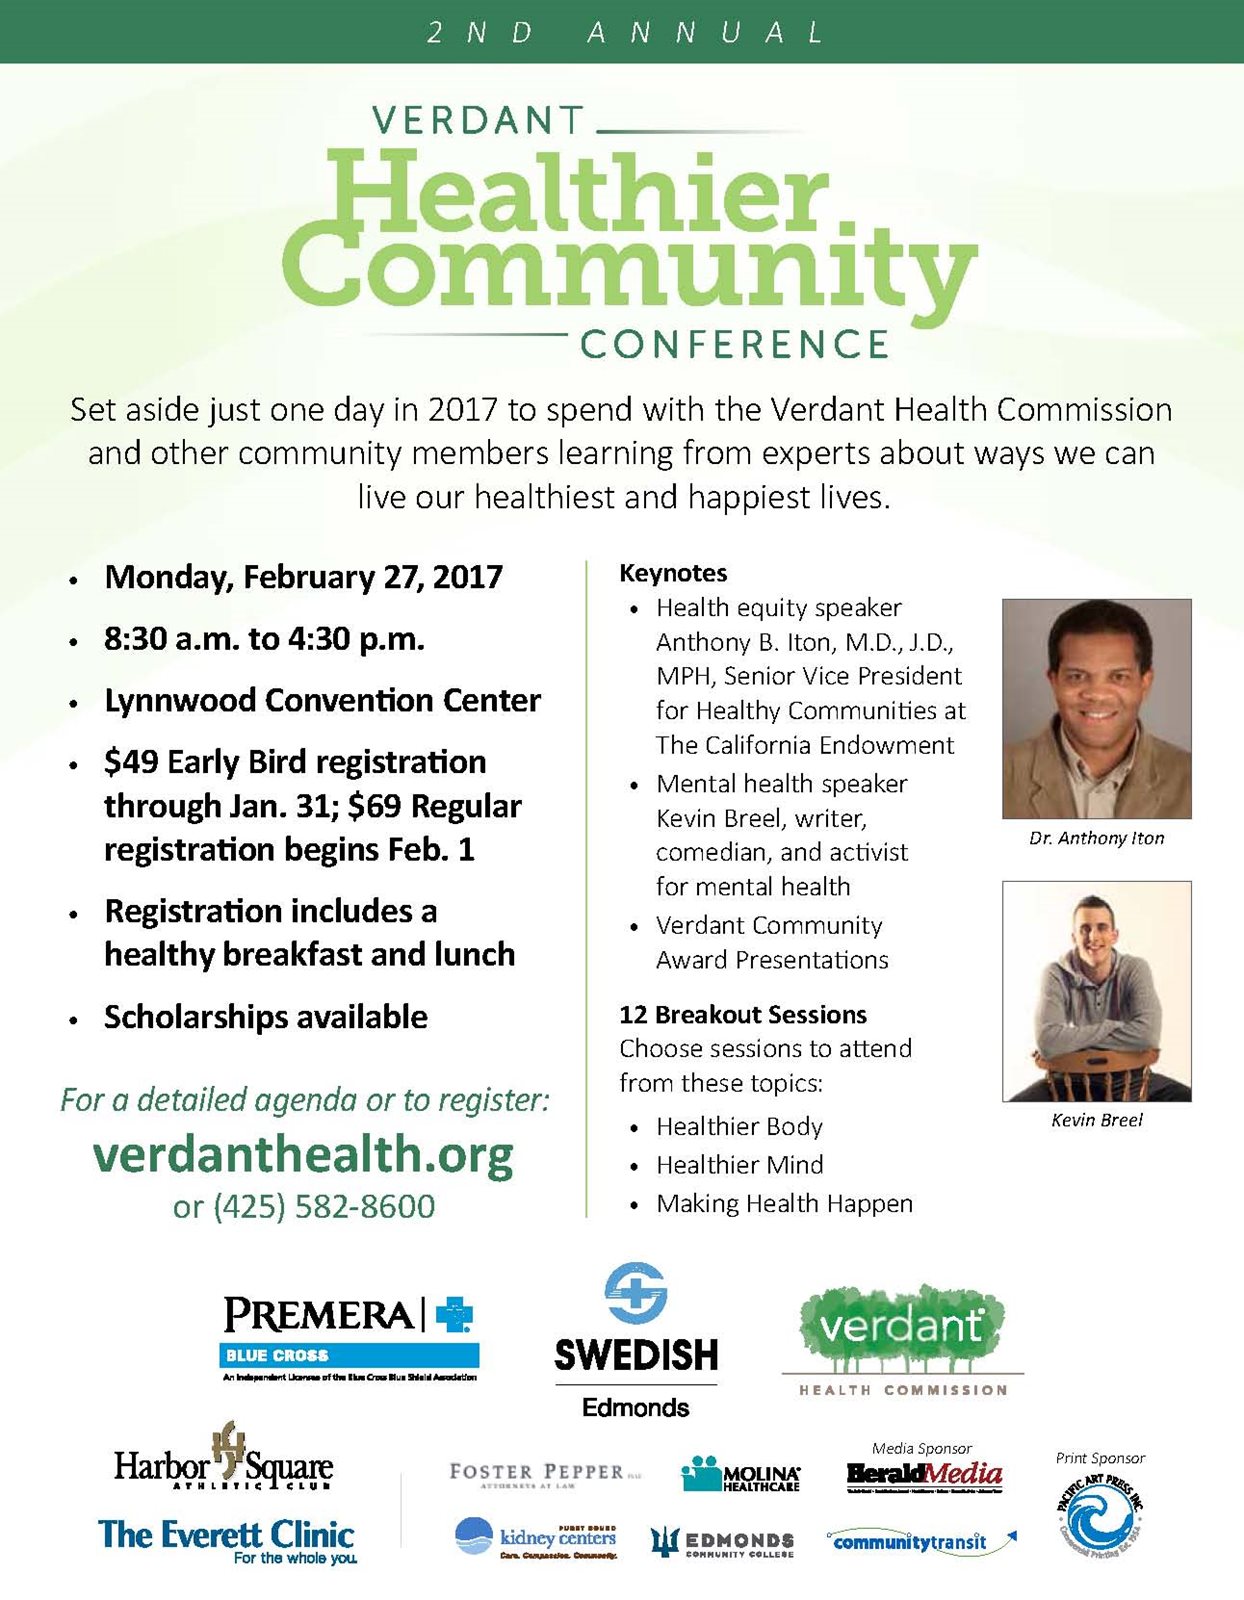 Verdant Healthier Community Conference Flyer